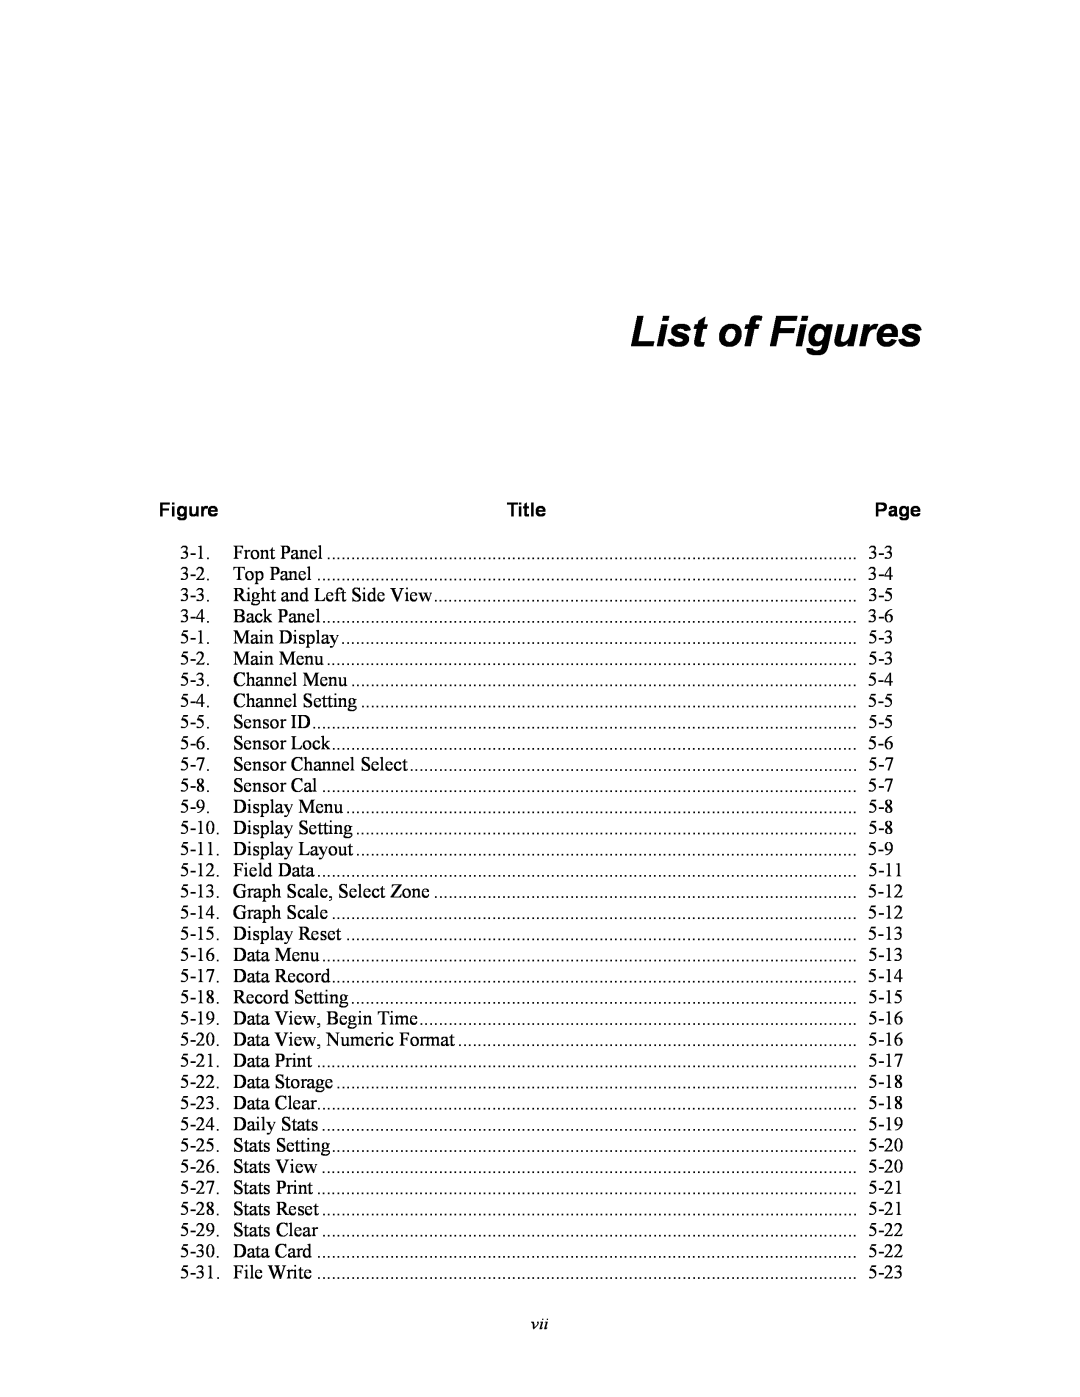 Fluke 5020A user manual List of Figures, Title 